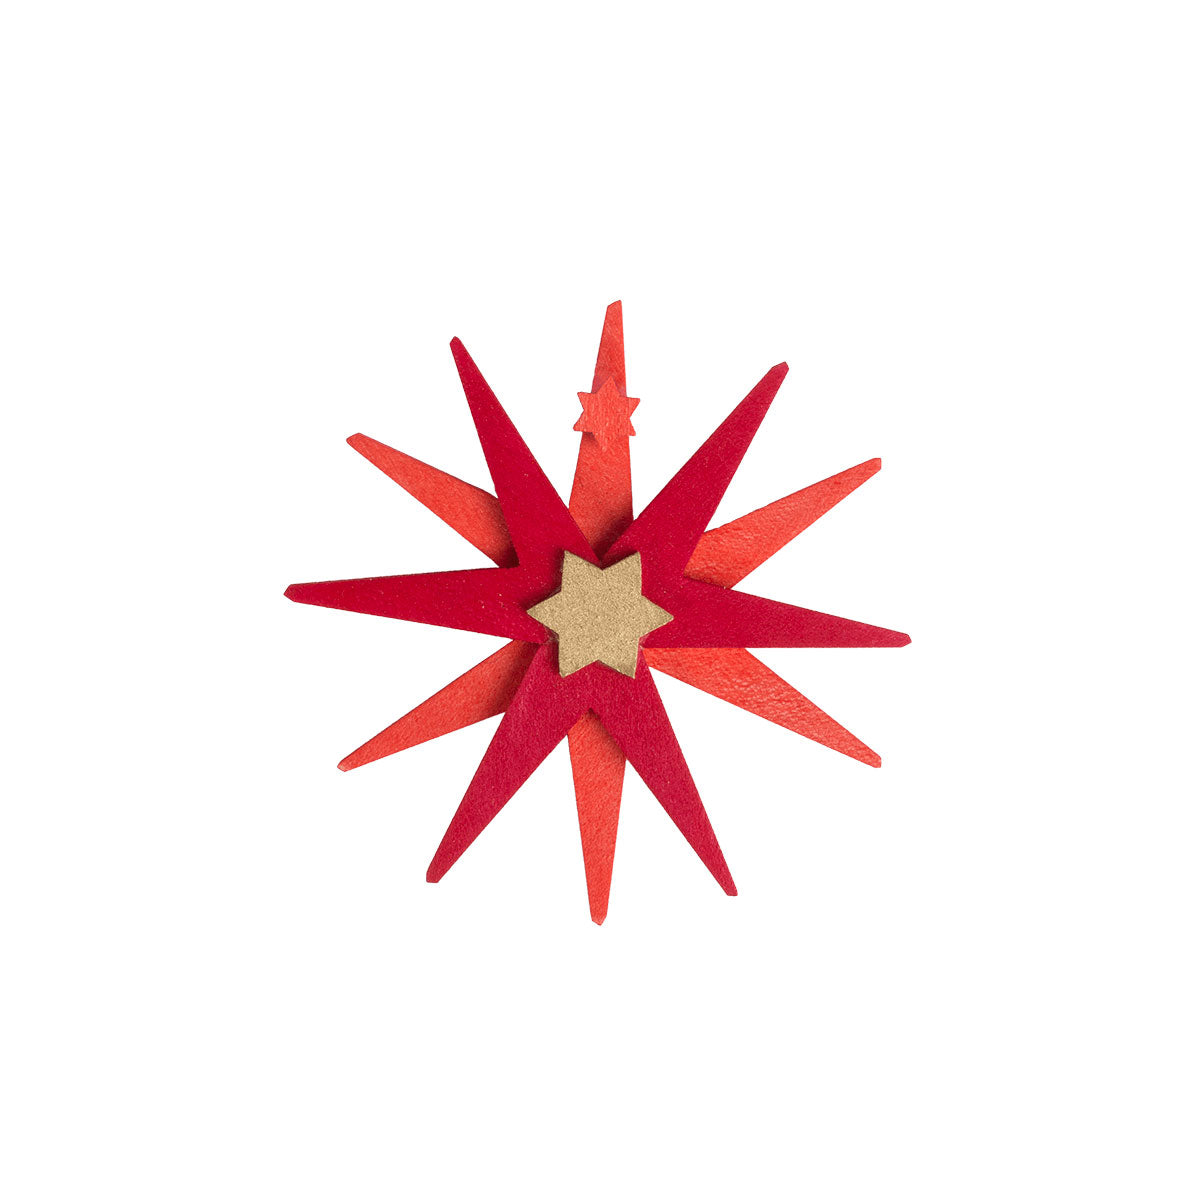 Graupner Christmas Large Star Ornament